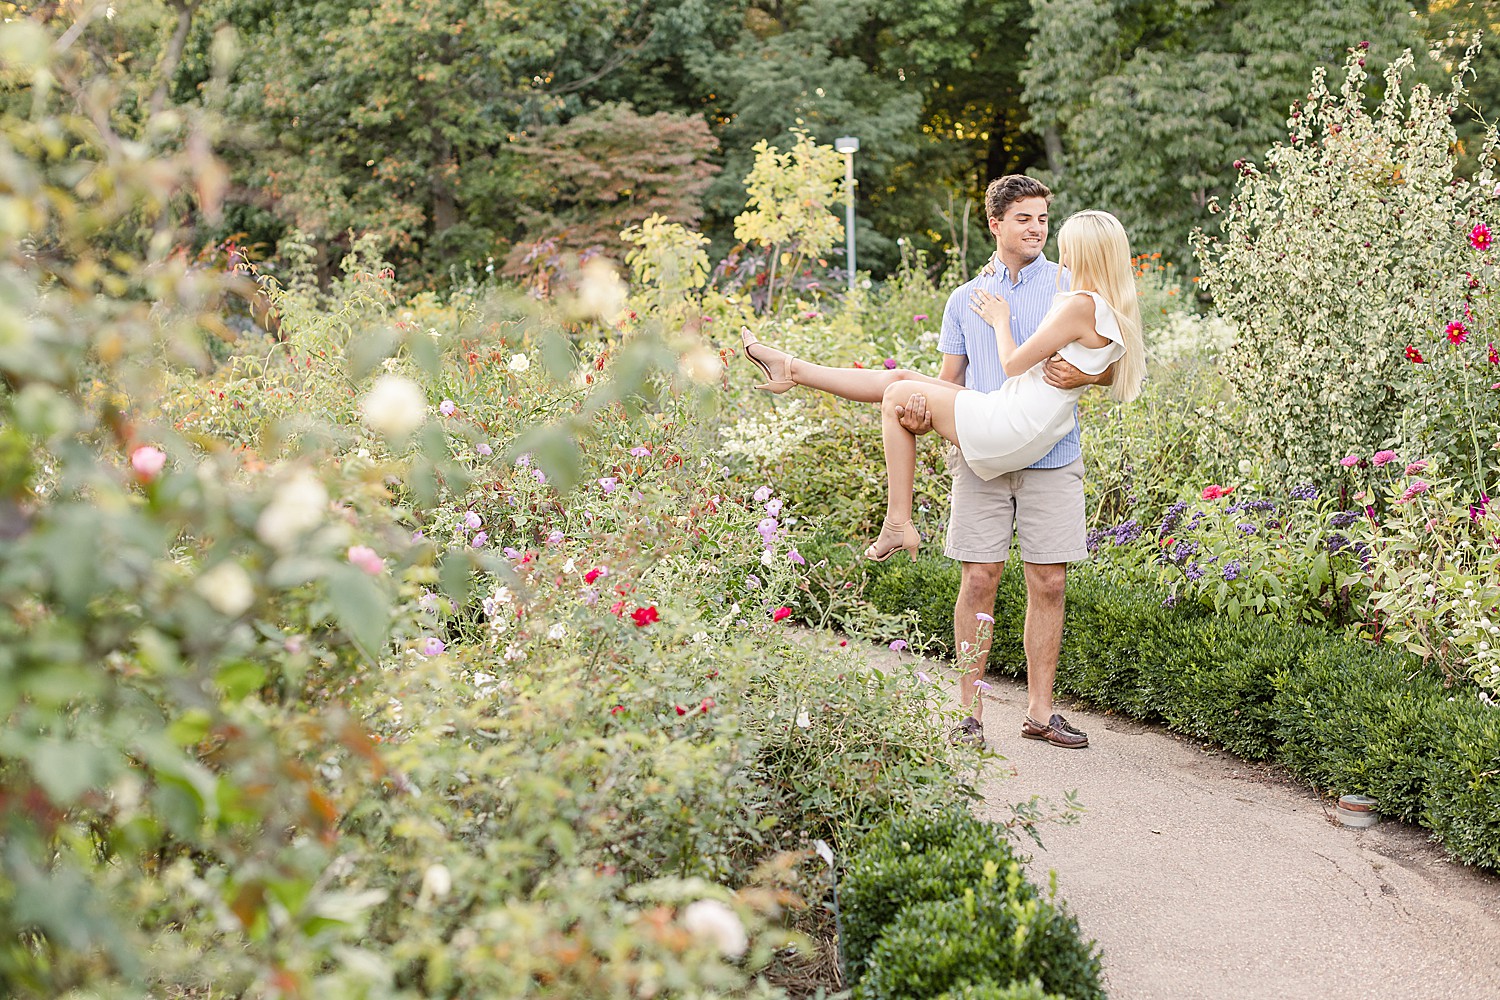 guy lifts up fiance in beautiful garden setting in PA